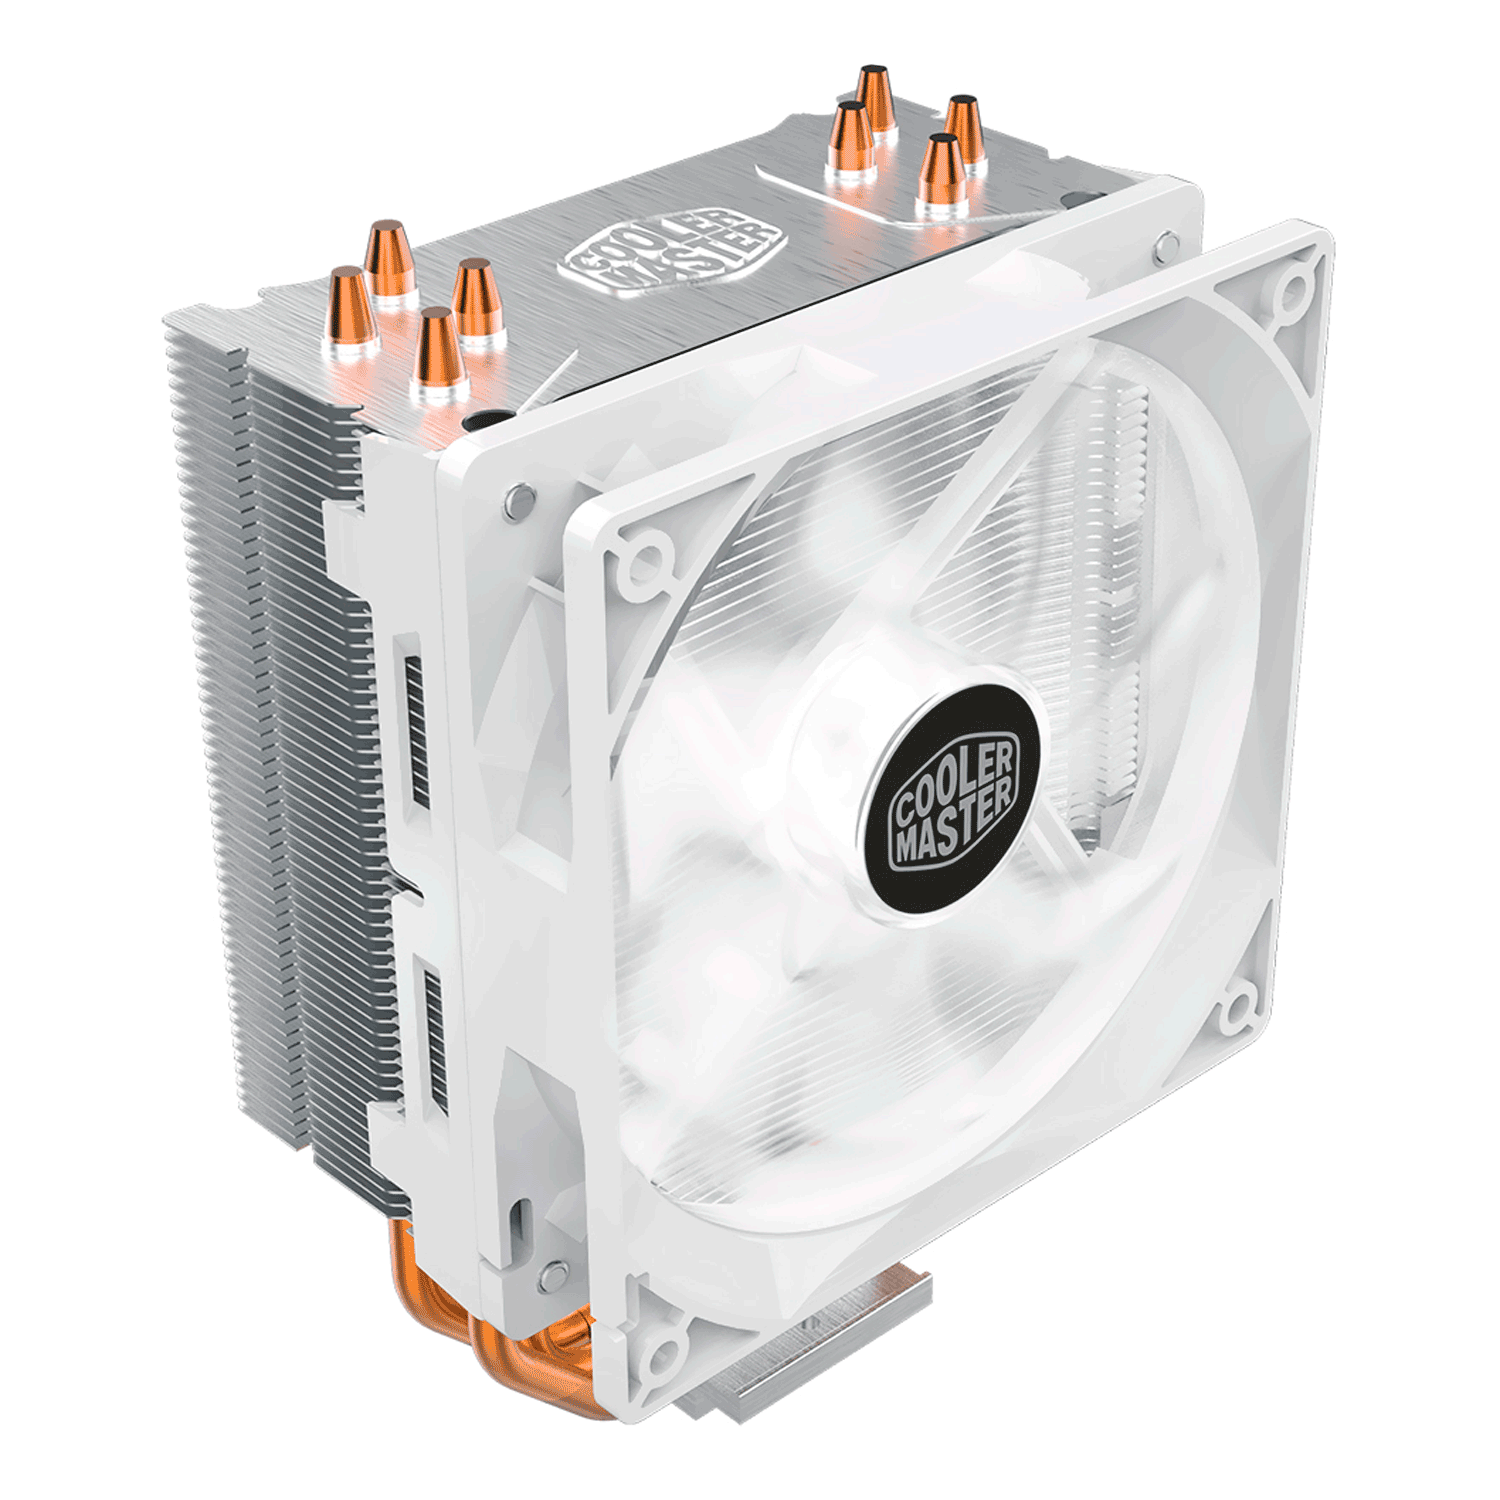 Cooler para Processador Cooler Master Hyper 212 LED White Edition - (RR-212L-16PW-R1)
